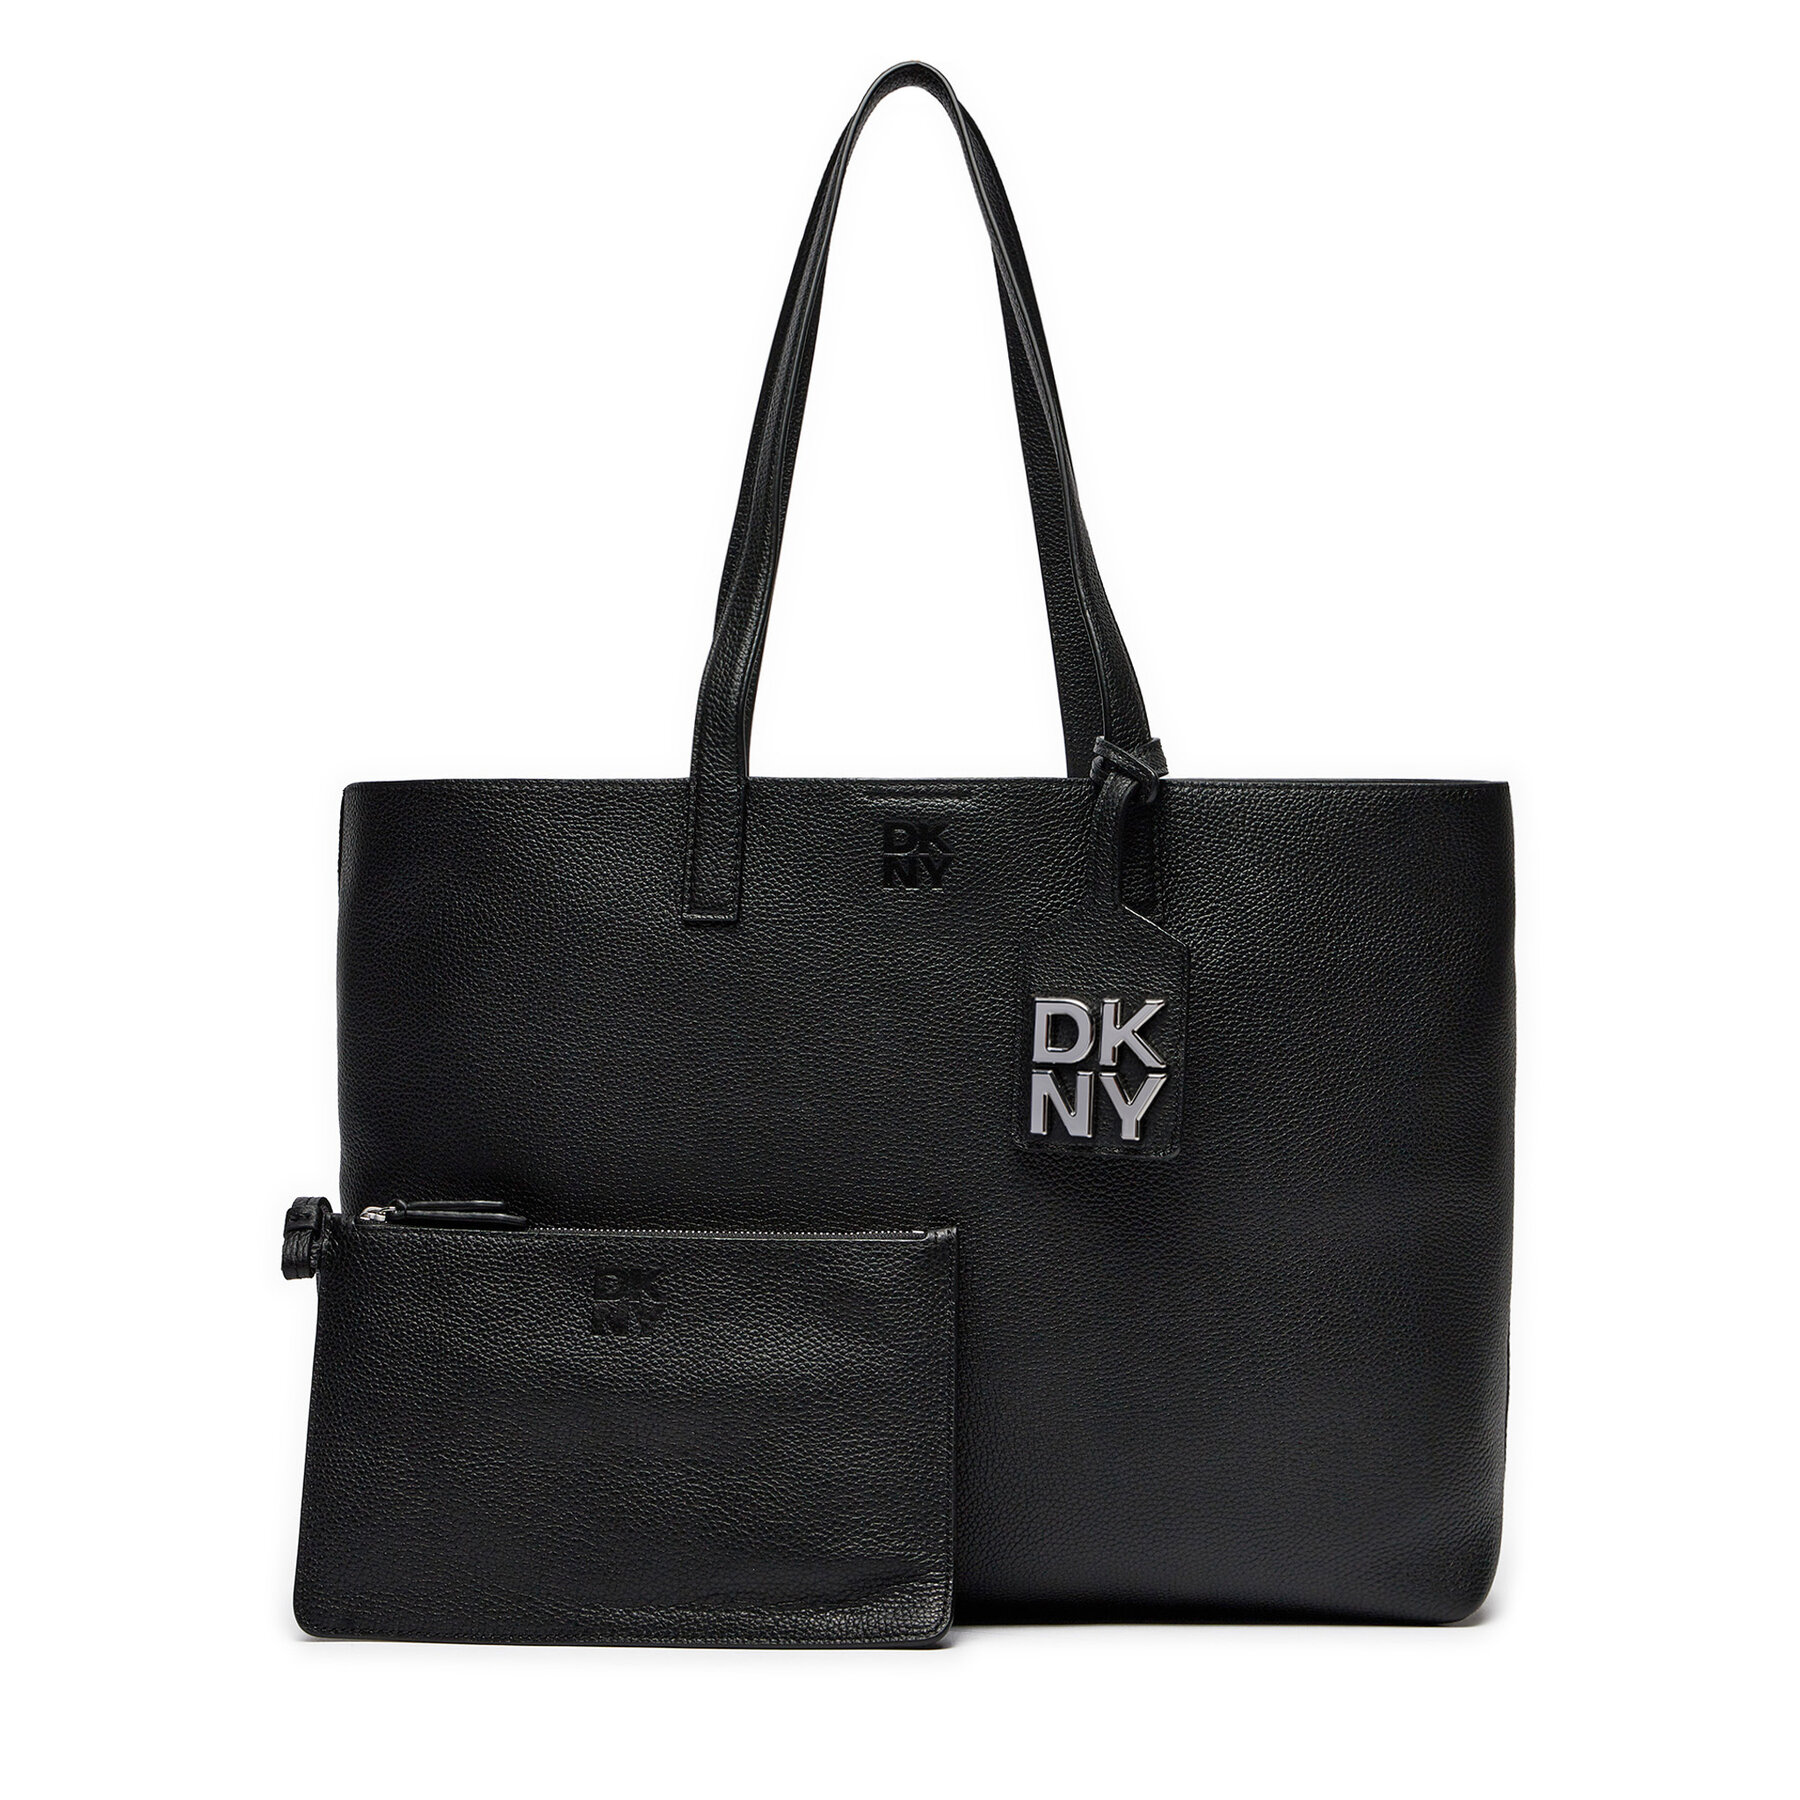 Handtasche DKNY Park Slope Shopping R41BAB88 Blk/Gold BGD von DKNY